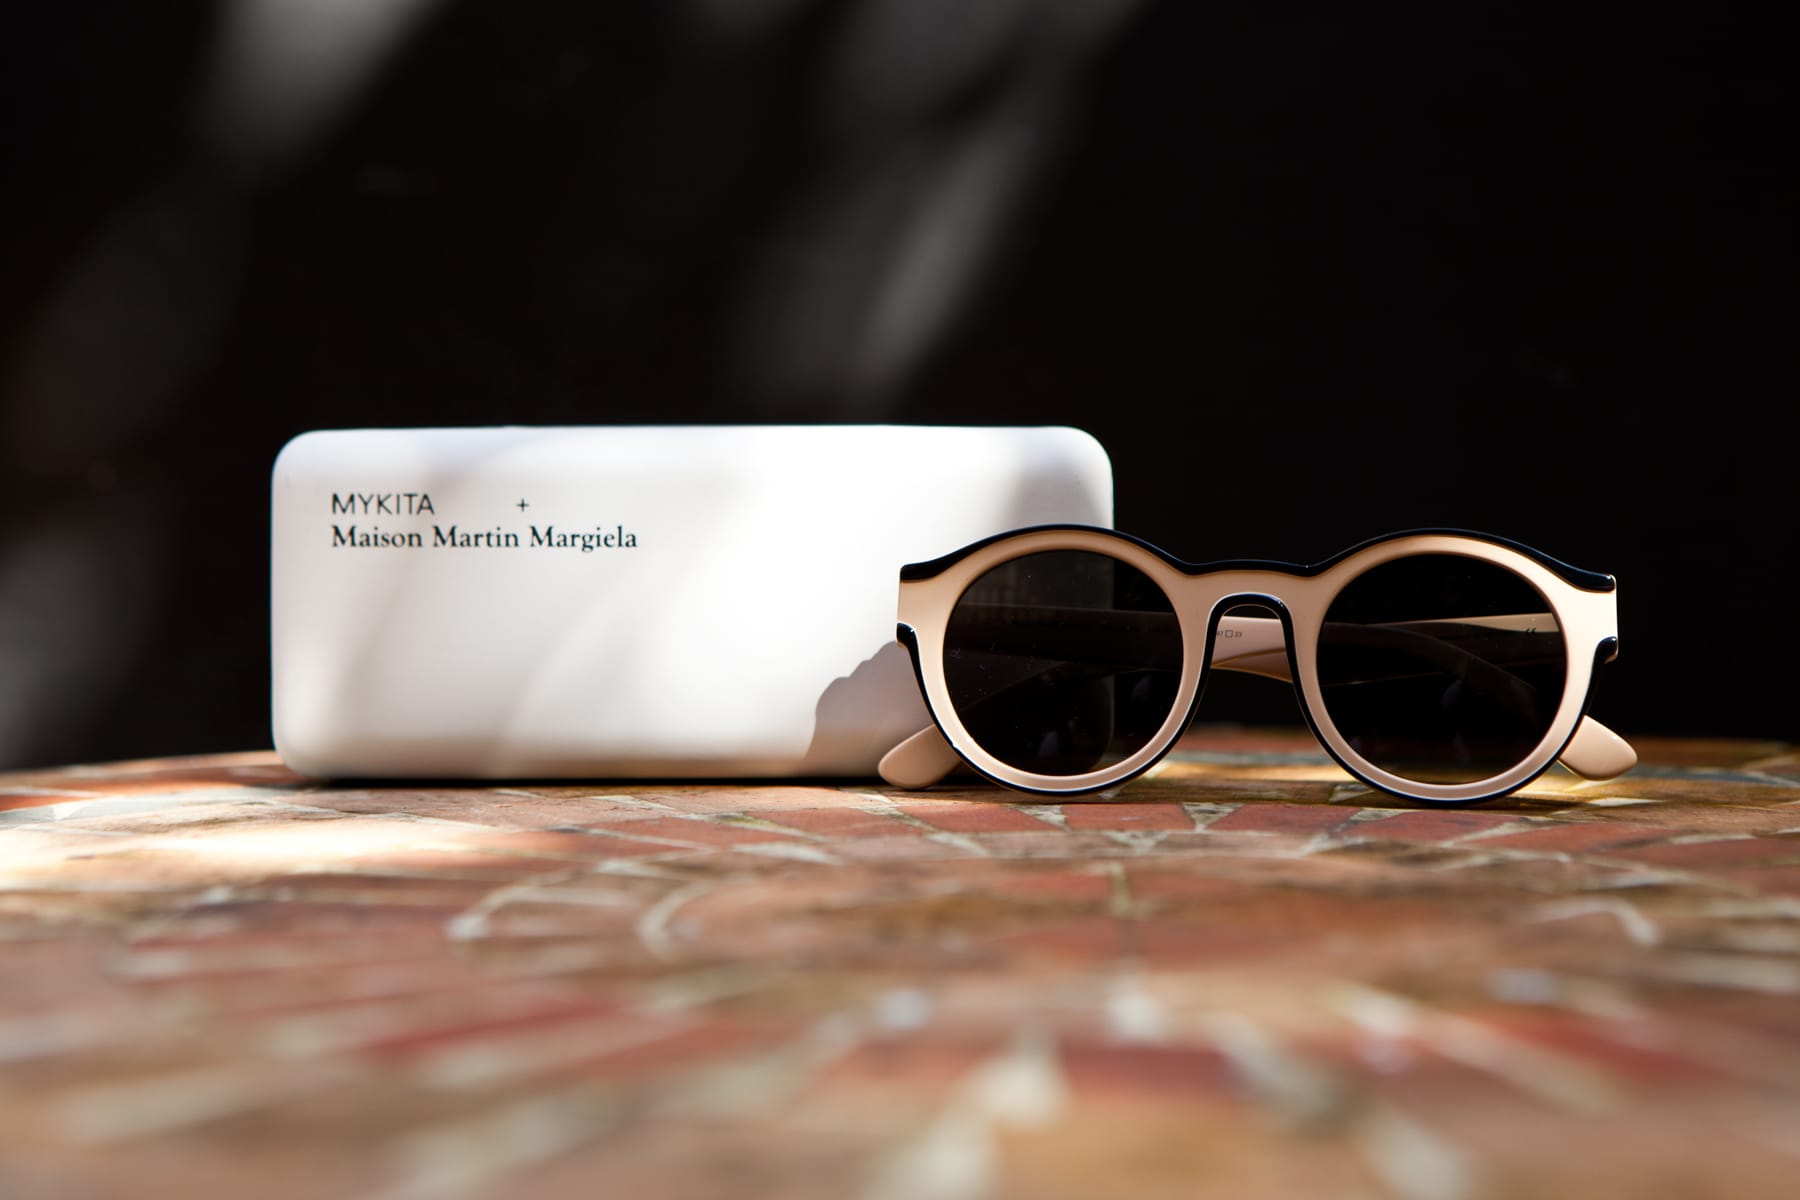 Maison Martin Margiela x MYKITA Dual Sunglasses | Hypebeast